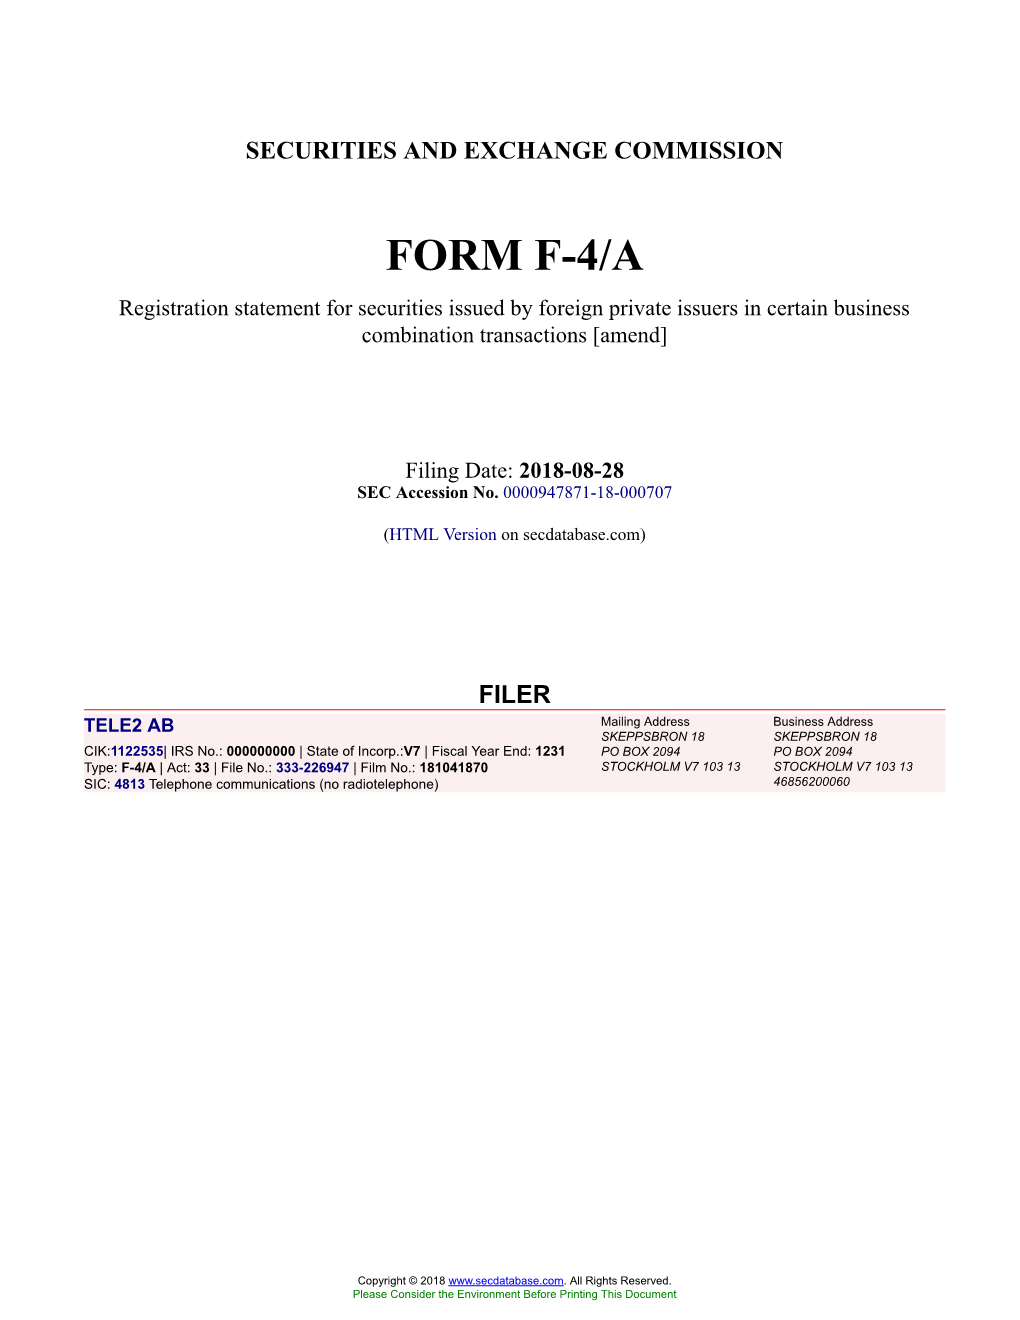 TELE2 AB Form F-4/A Filed 2018-08-28